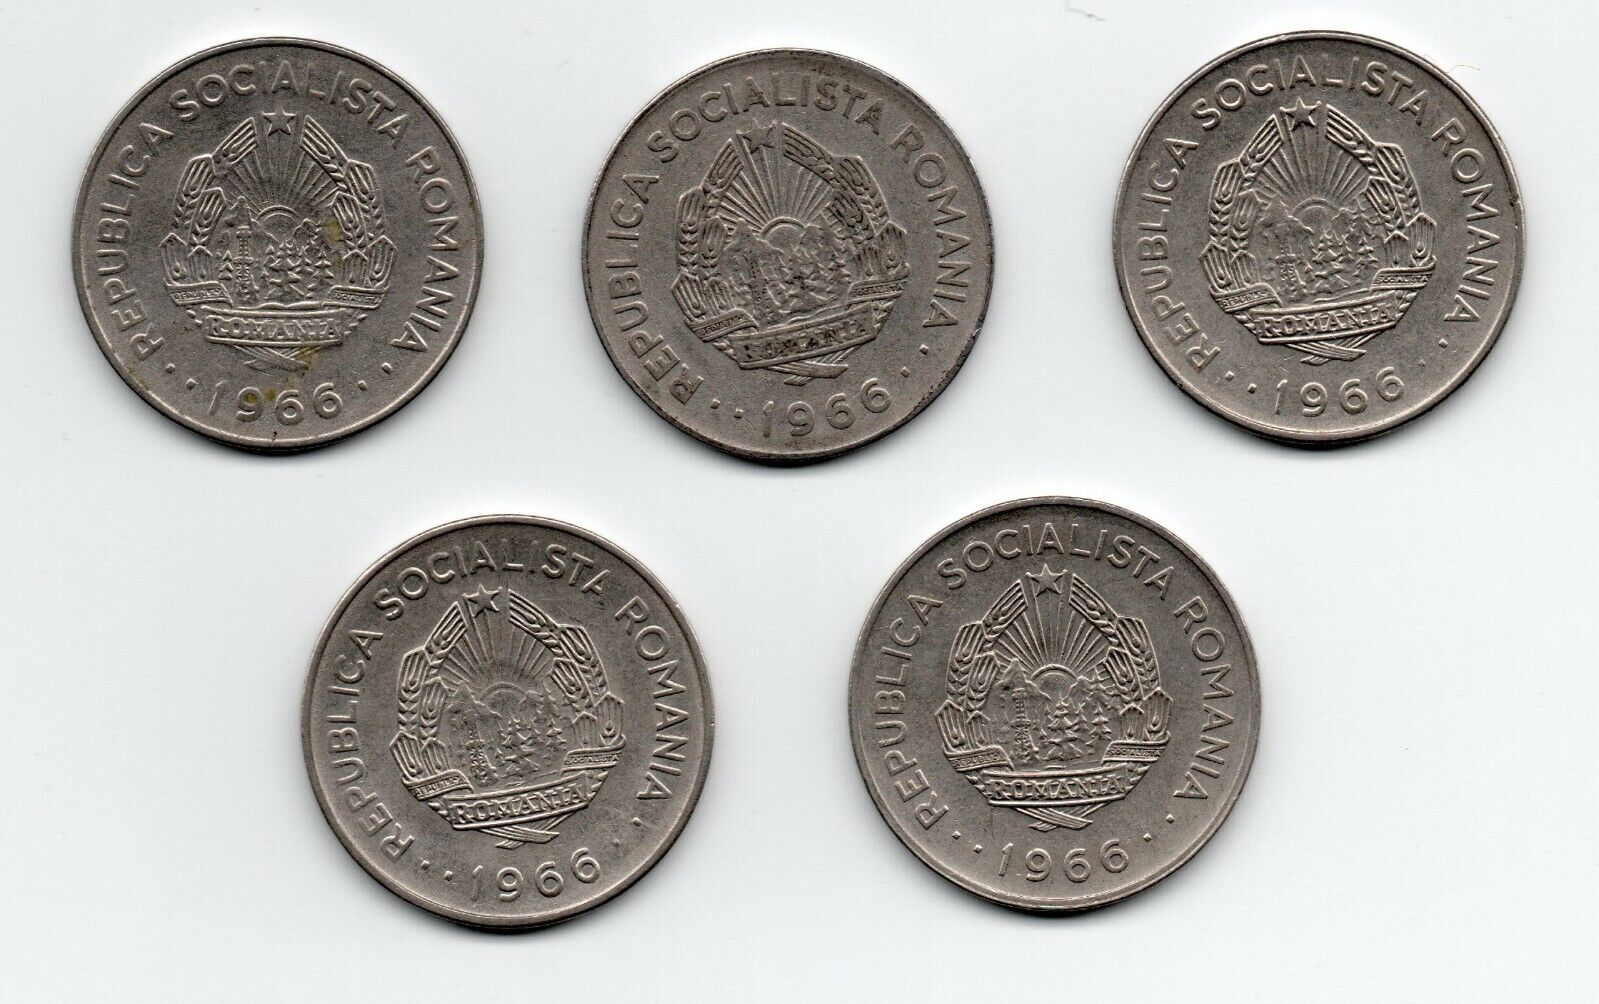 Romania coins LOT (5 x 1 leu) 1966, VF-XF Без бренда - фотография #2